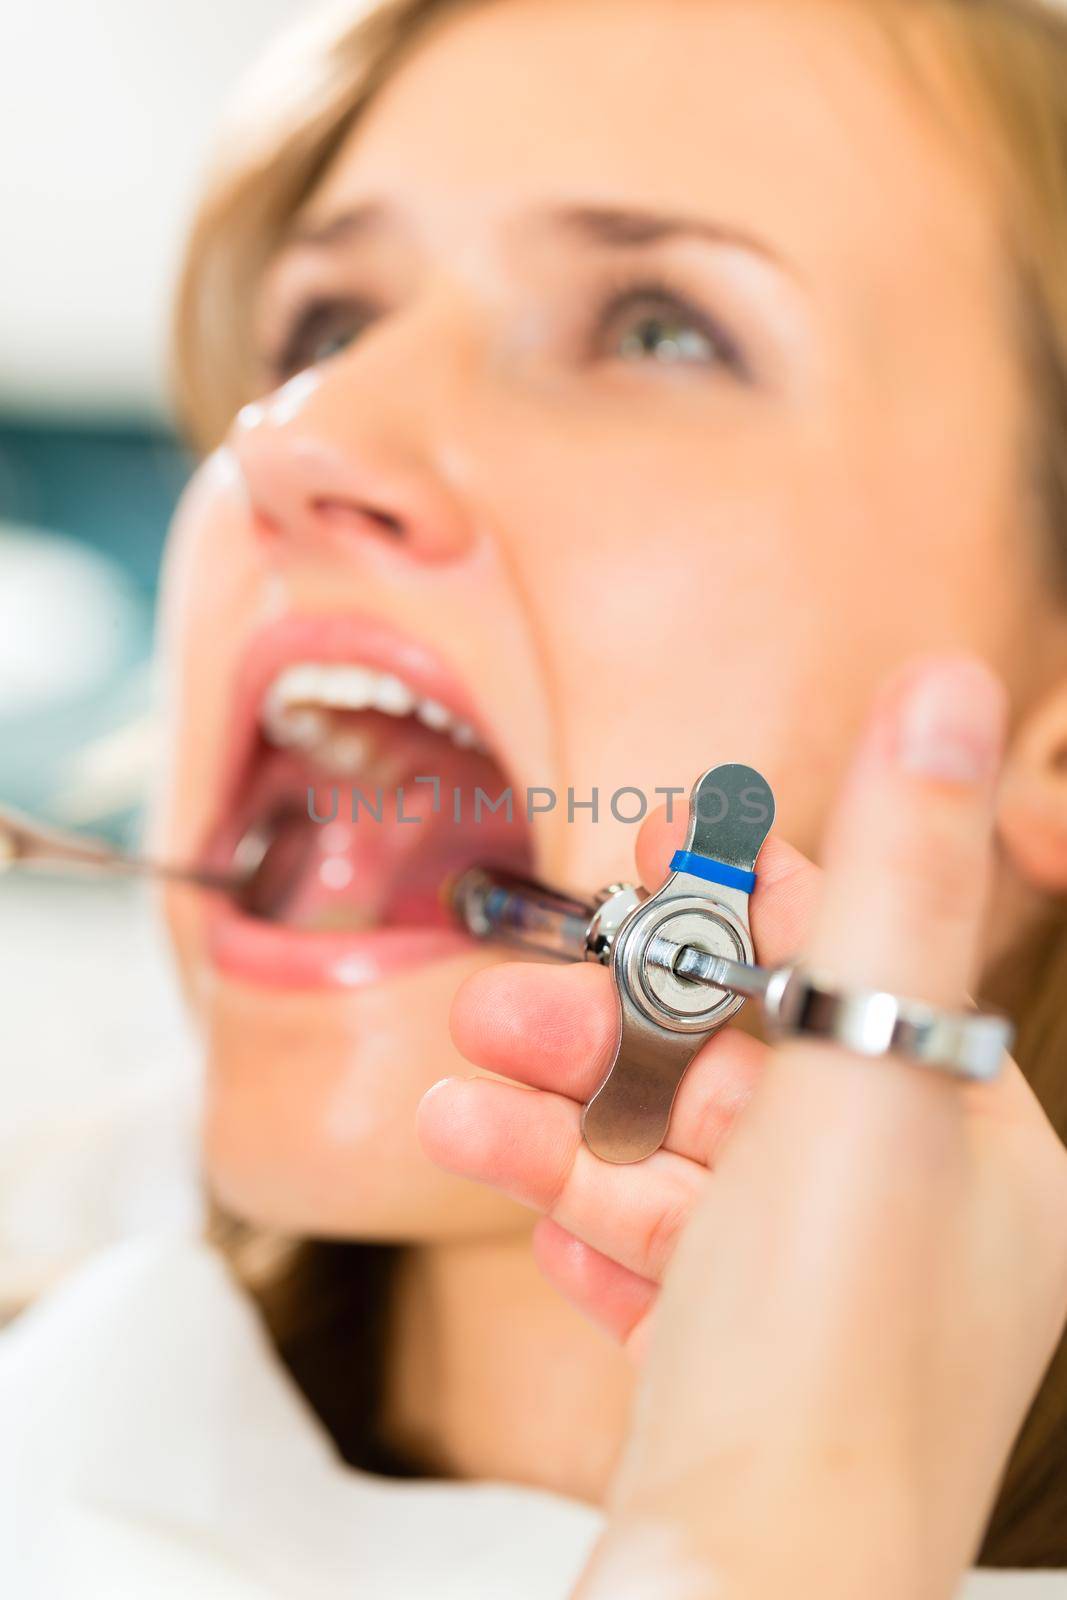 Syringe - dentist gives anesthesia by Kzenon